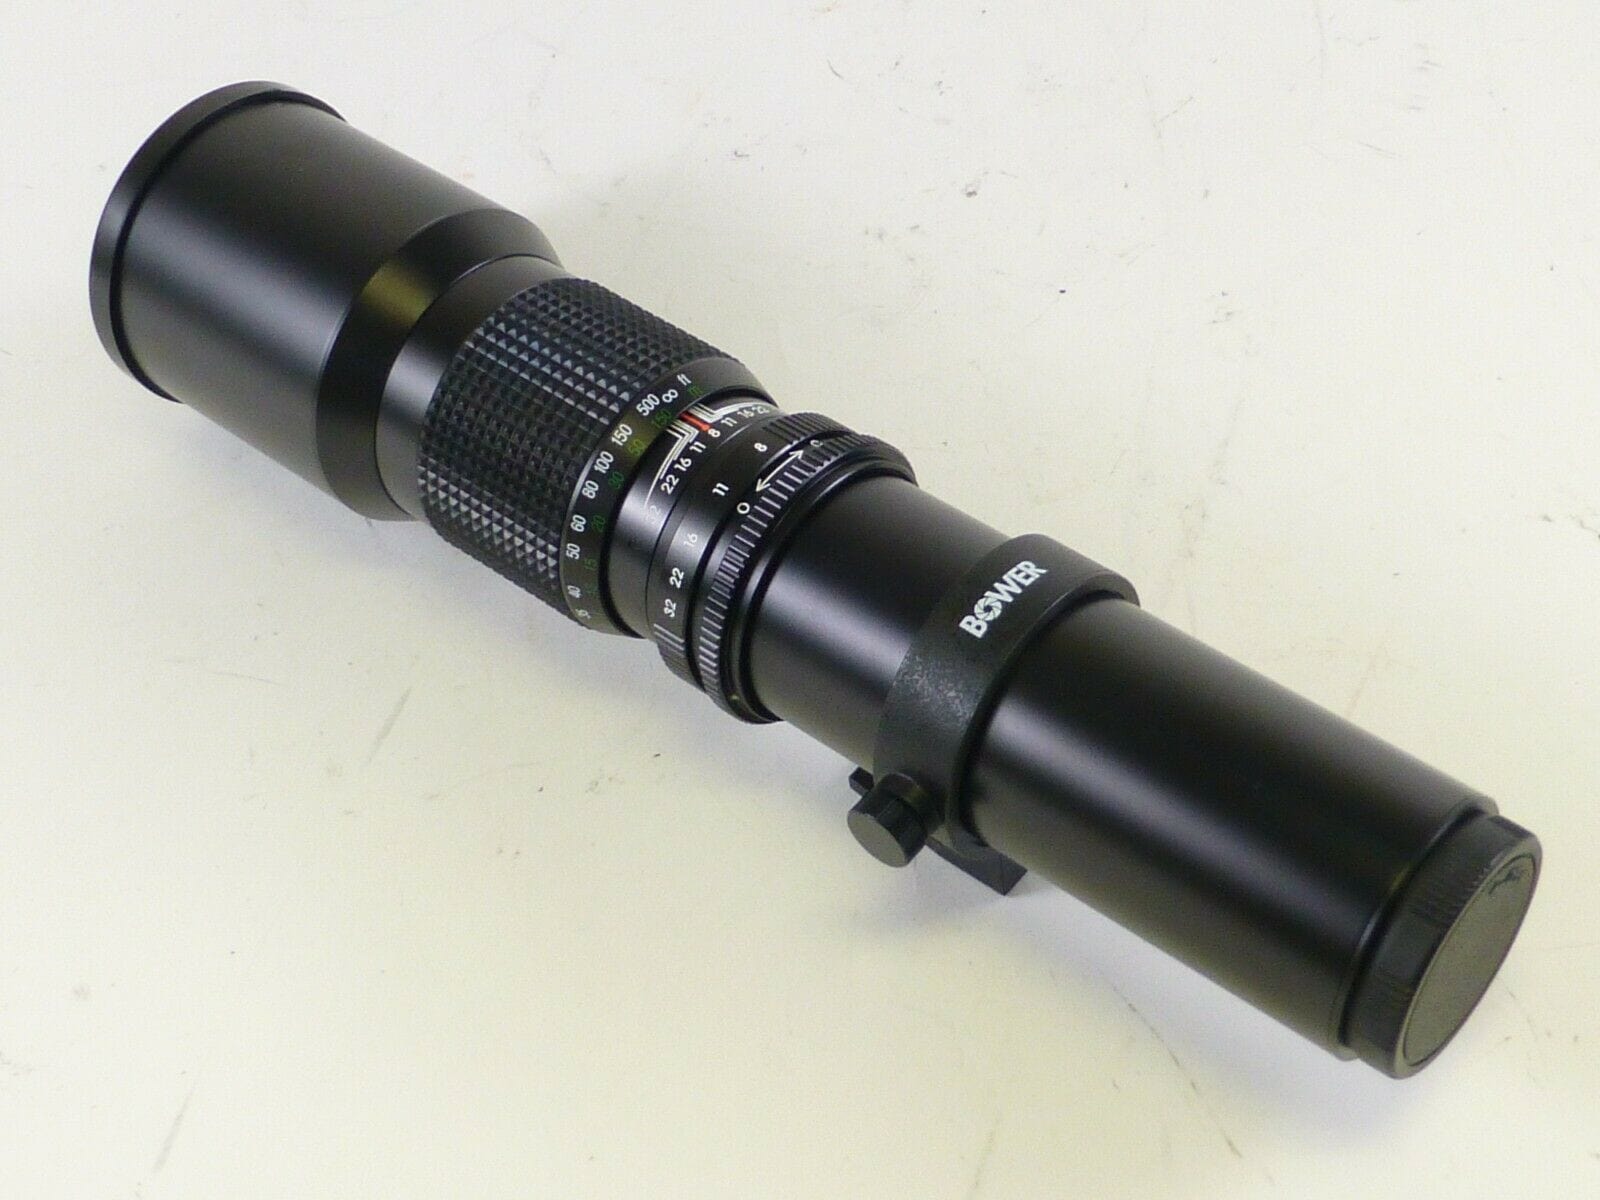 Bower 500mm F/8 Preset Telephoto Lens for SLR and DSLR Cameras, in